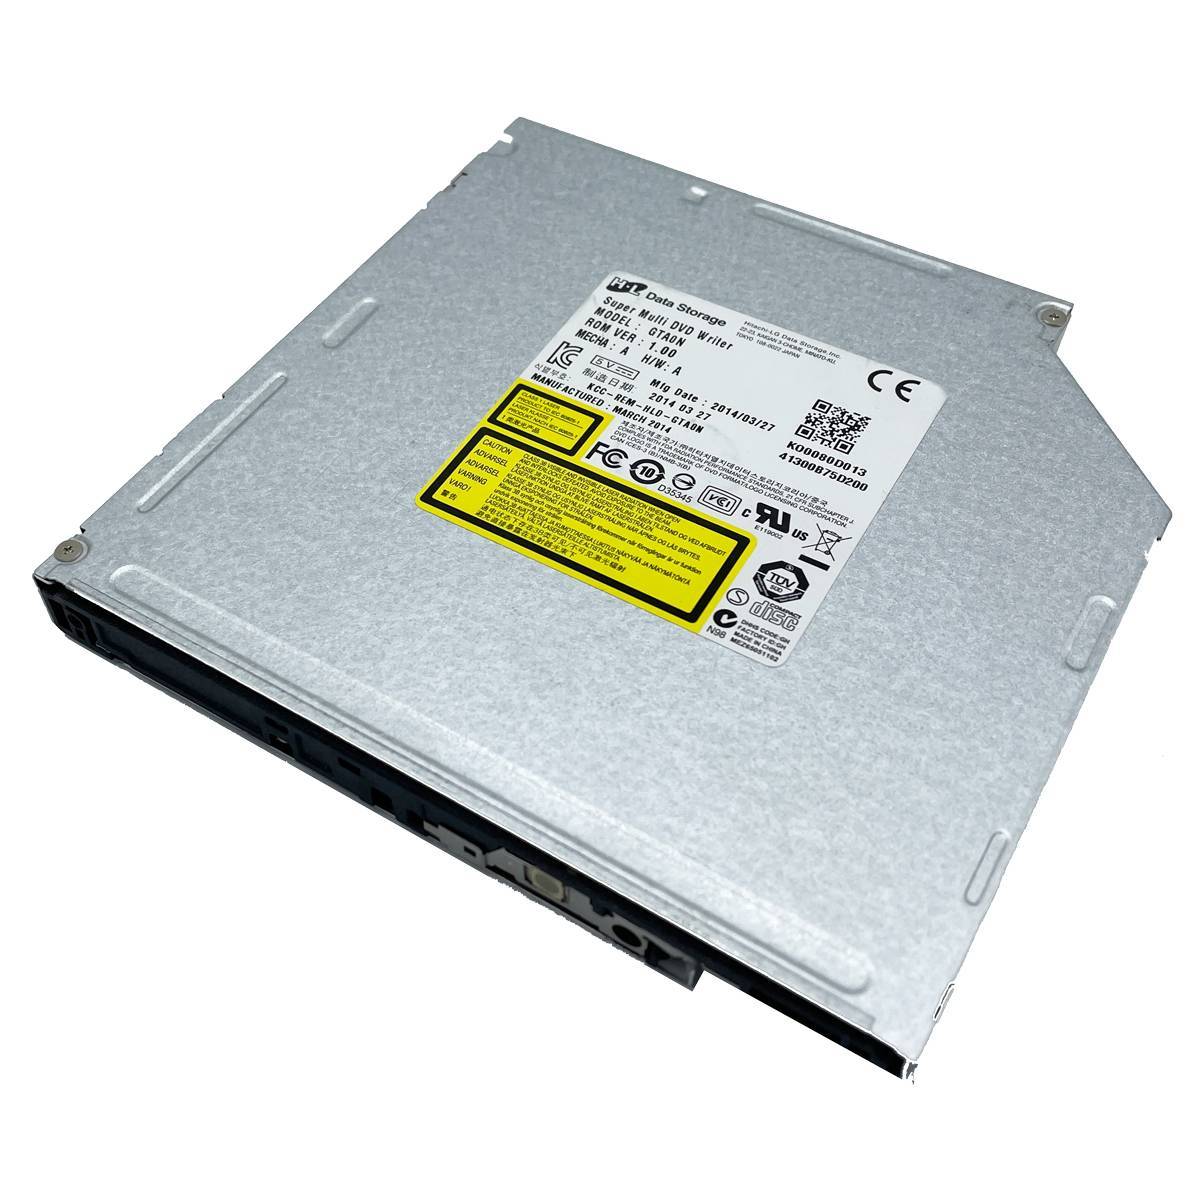 DVD-Brenner LG GTA0N SATA slim 12.9mm gebraucht